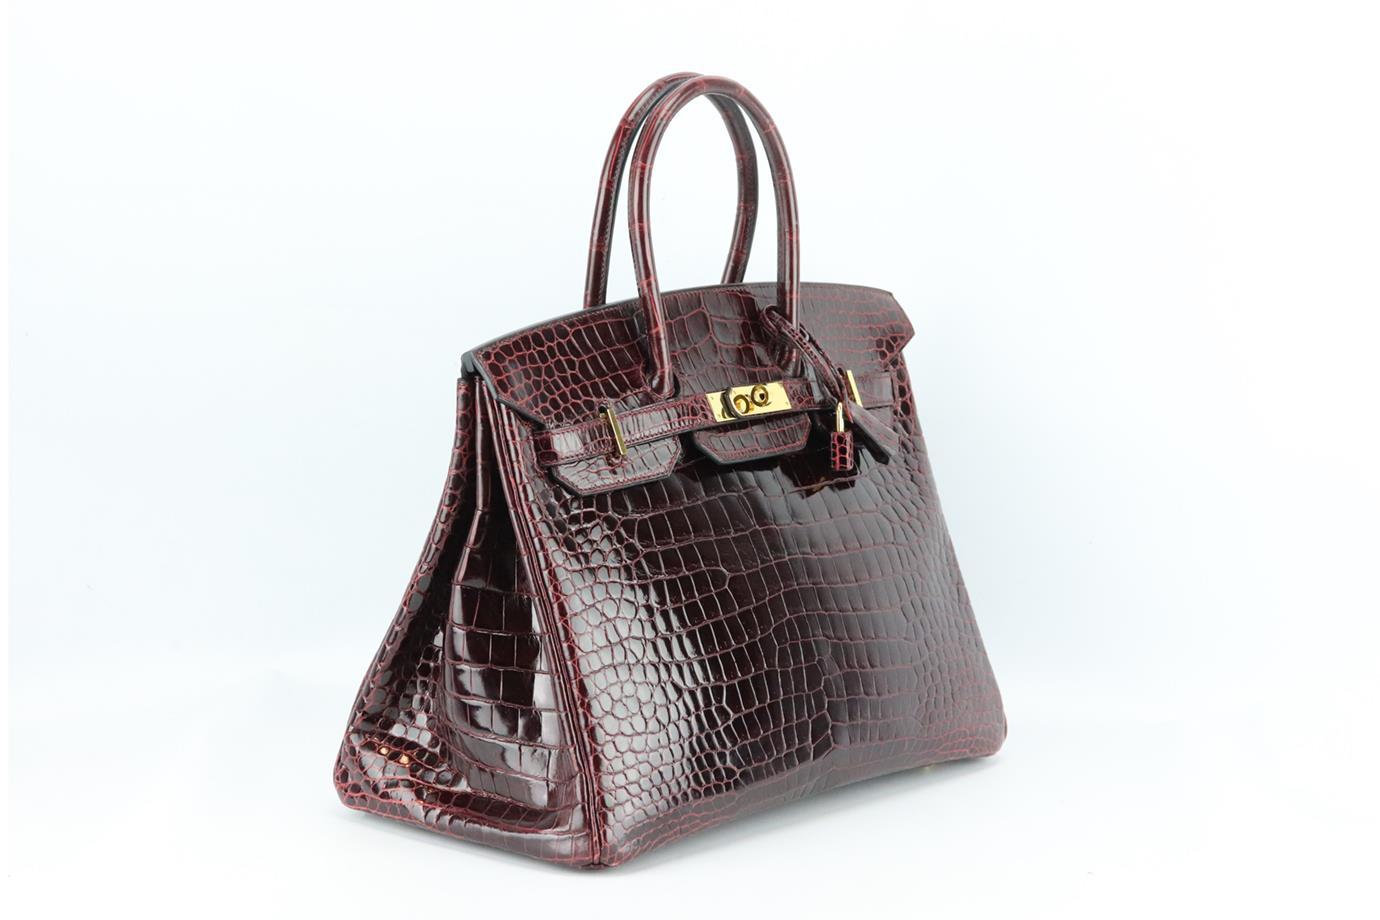 Hermès 2013 Birkin 35cm Porosus Krokodil Leder Tasche im Angebot 1